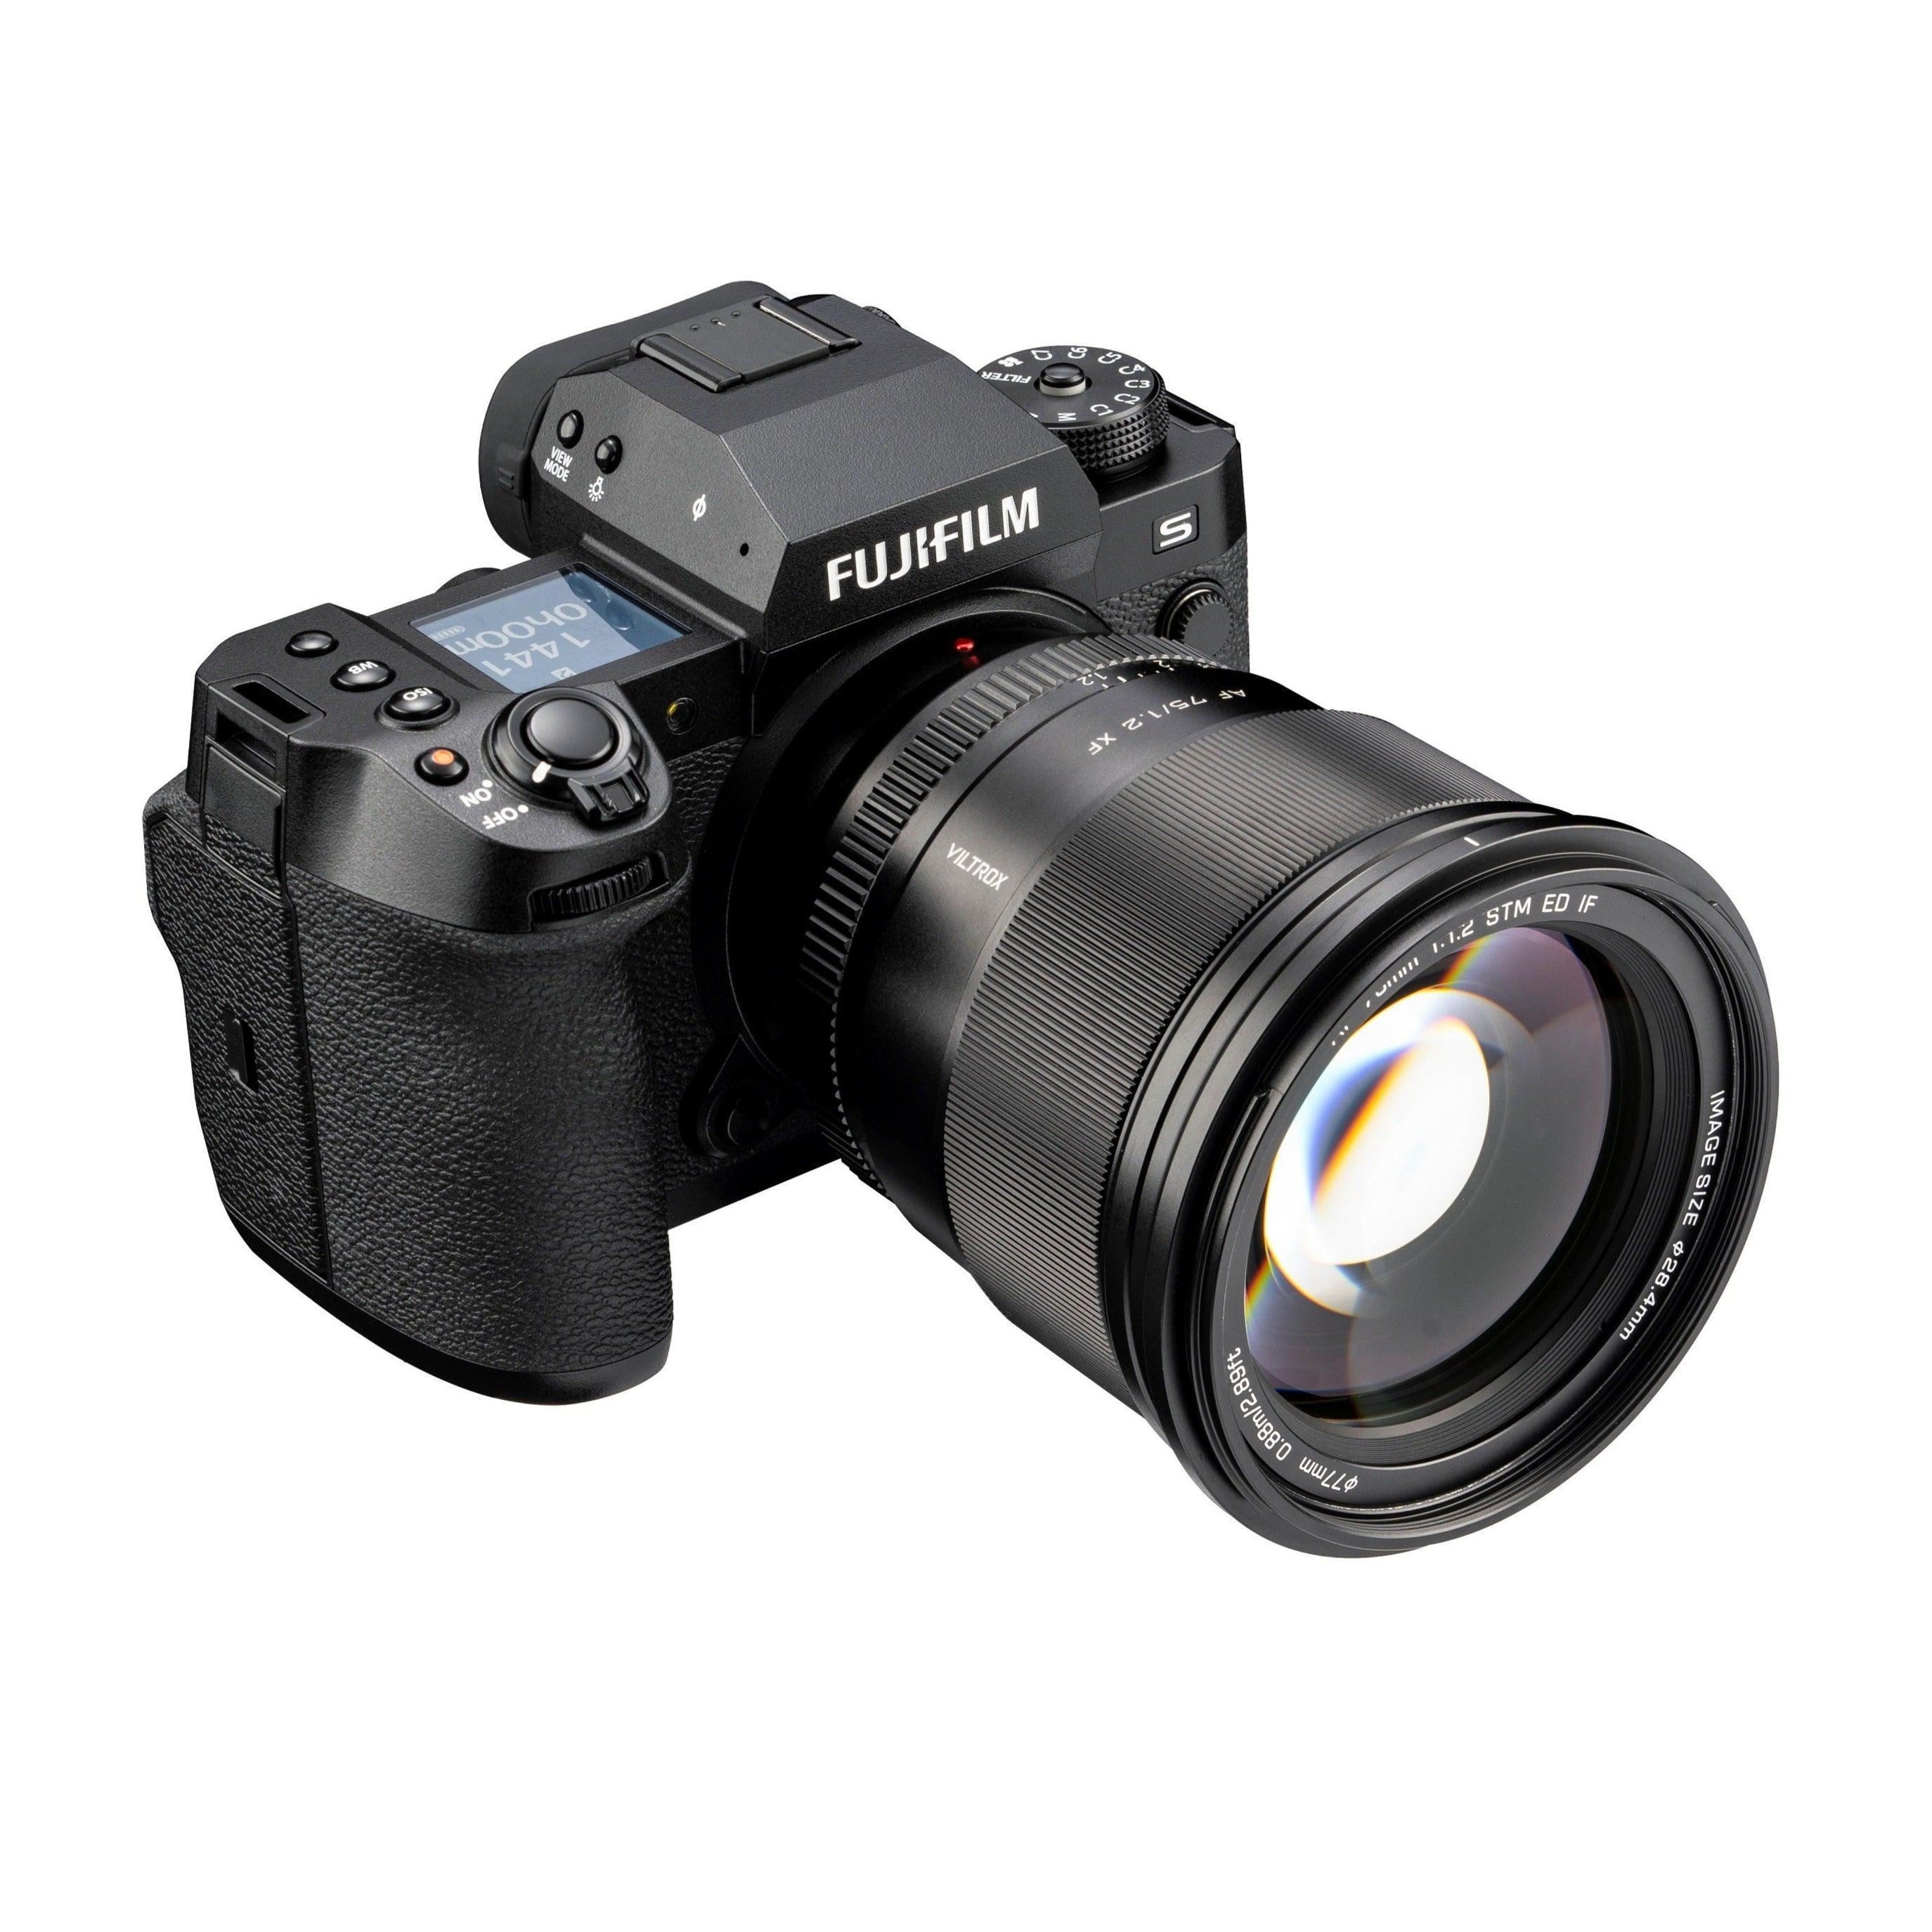 Viltrox 75mm F1.2 PRO XF Auto Focus Large Aperture Prime Lens for Fujifilm X - Vitopal